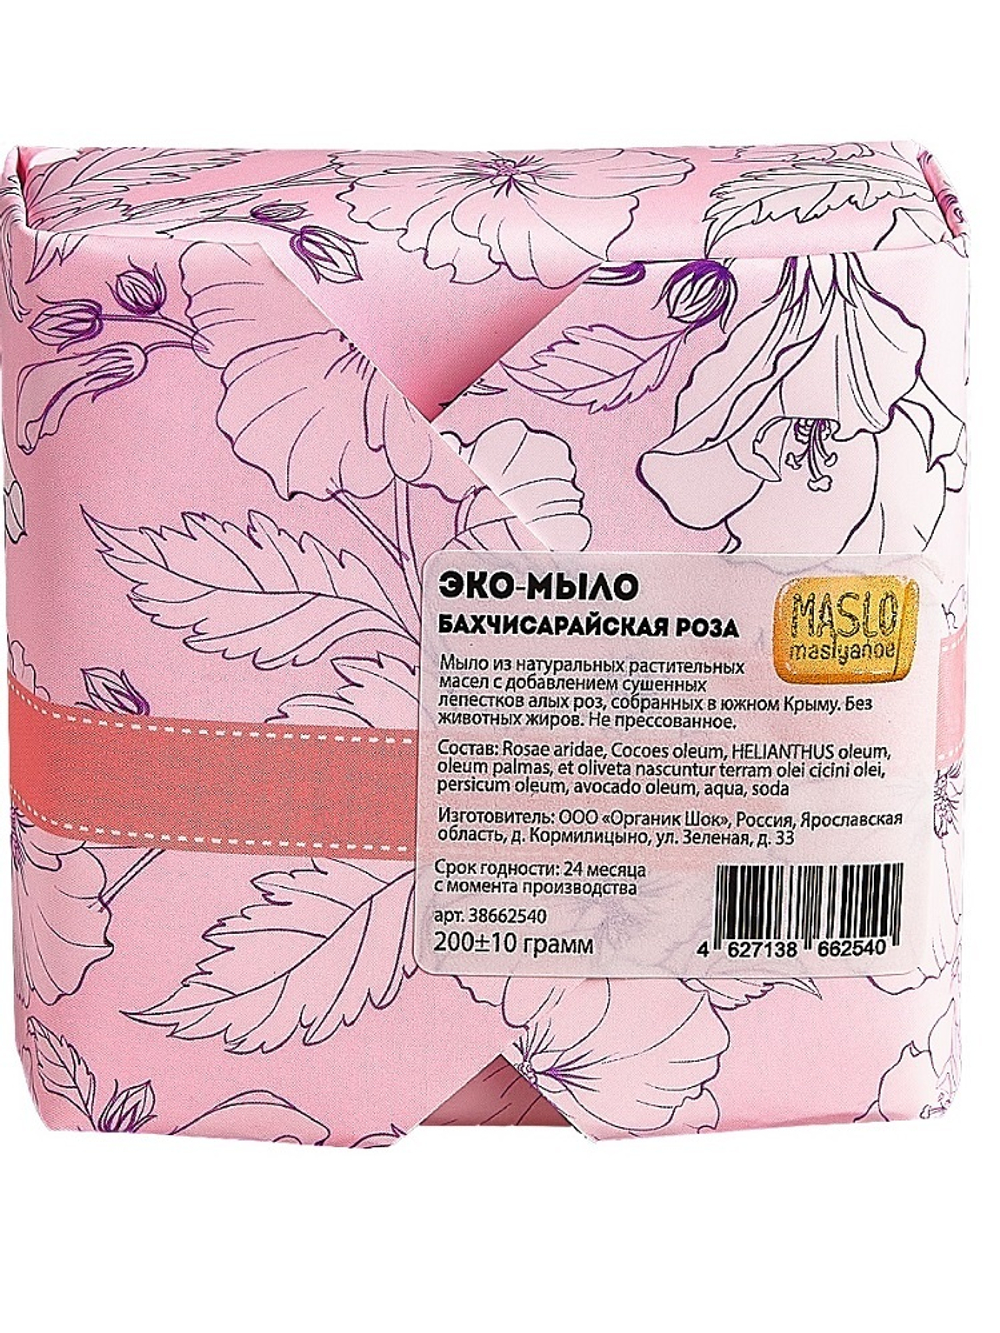 Maslo Maslyanoe Эко-мыло Бахчисарайская чайная роза, 200 гр